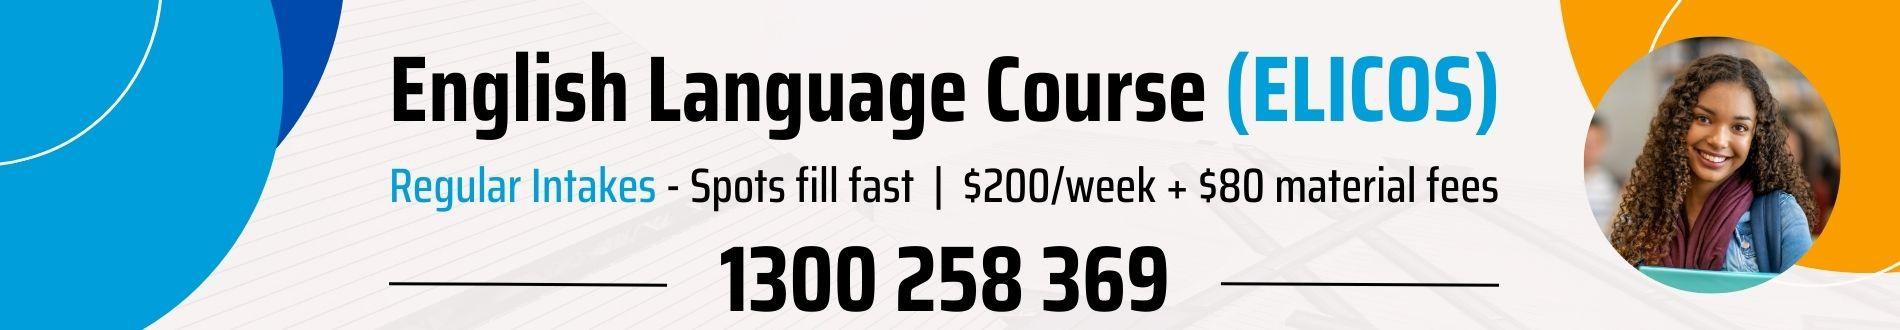 English Language Couerse ELICOS International Students Australia